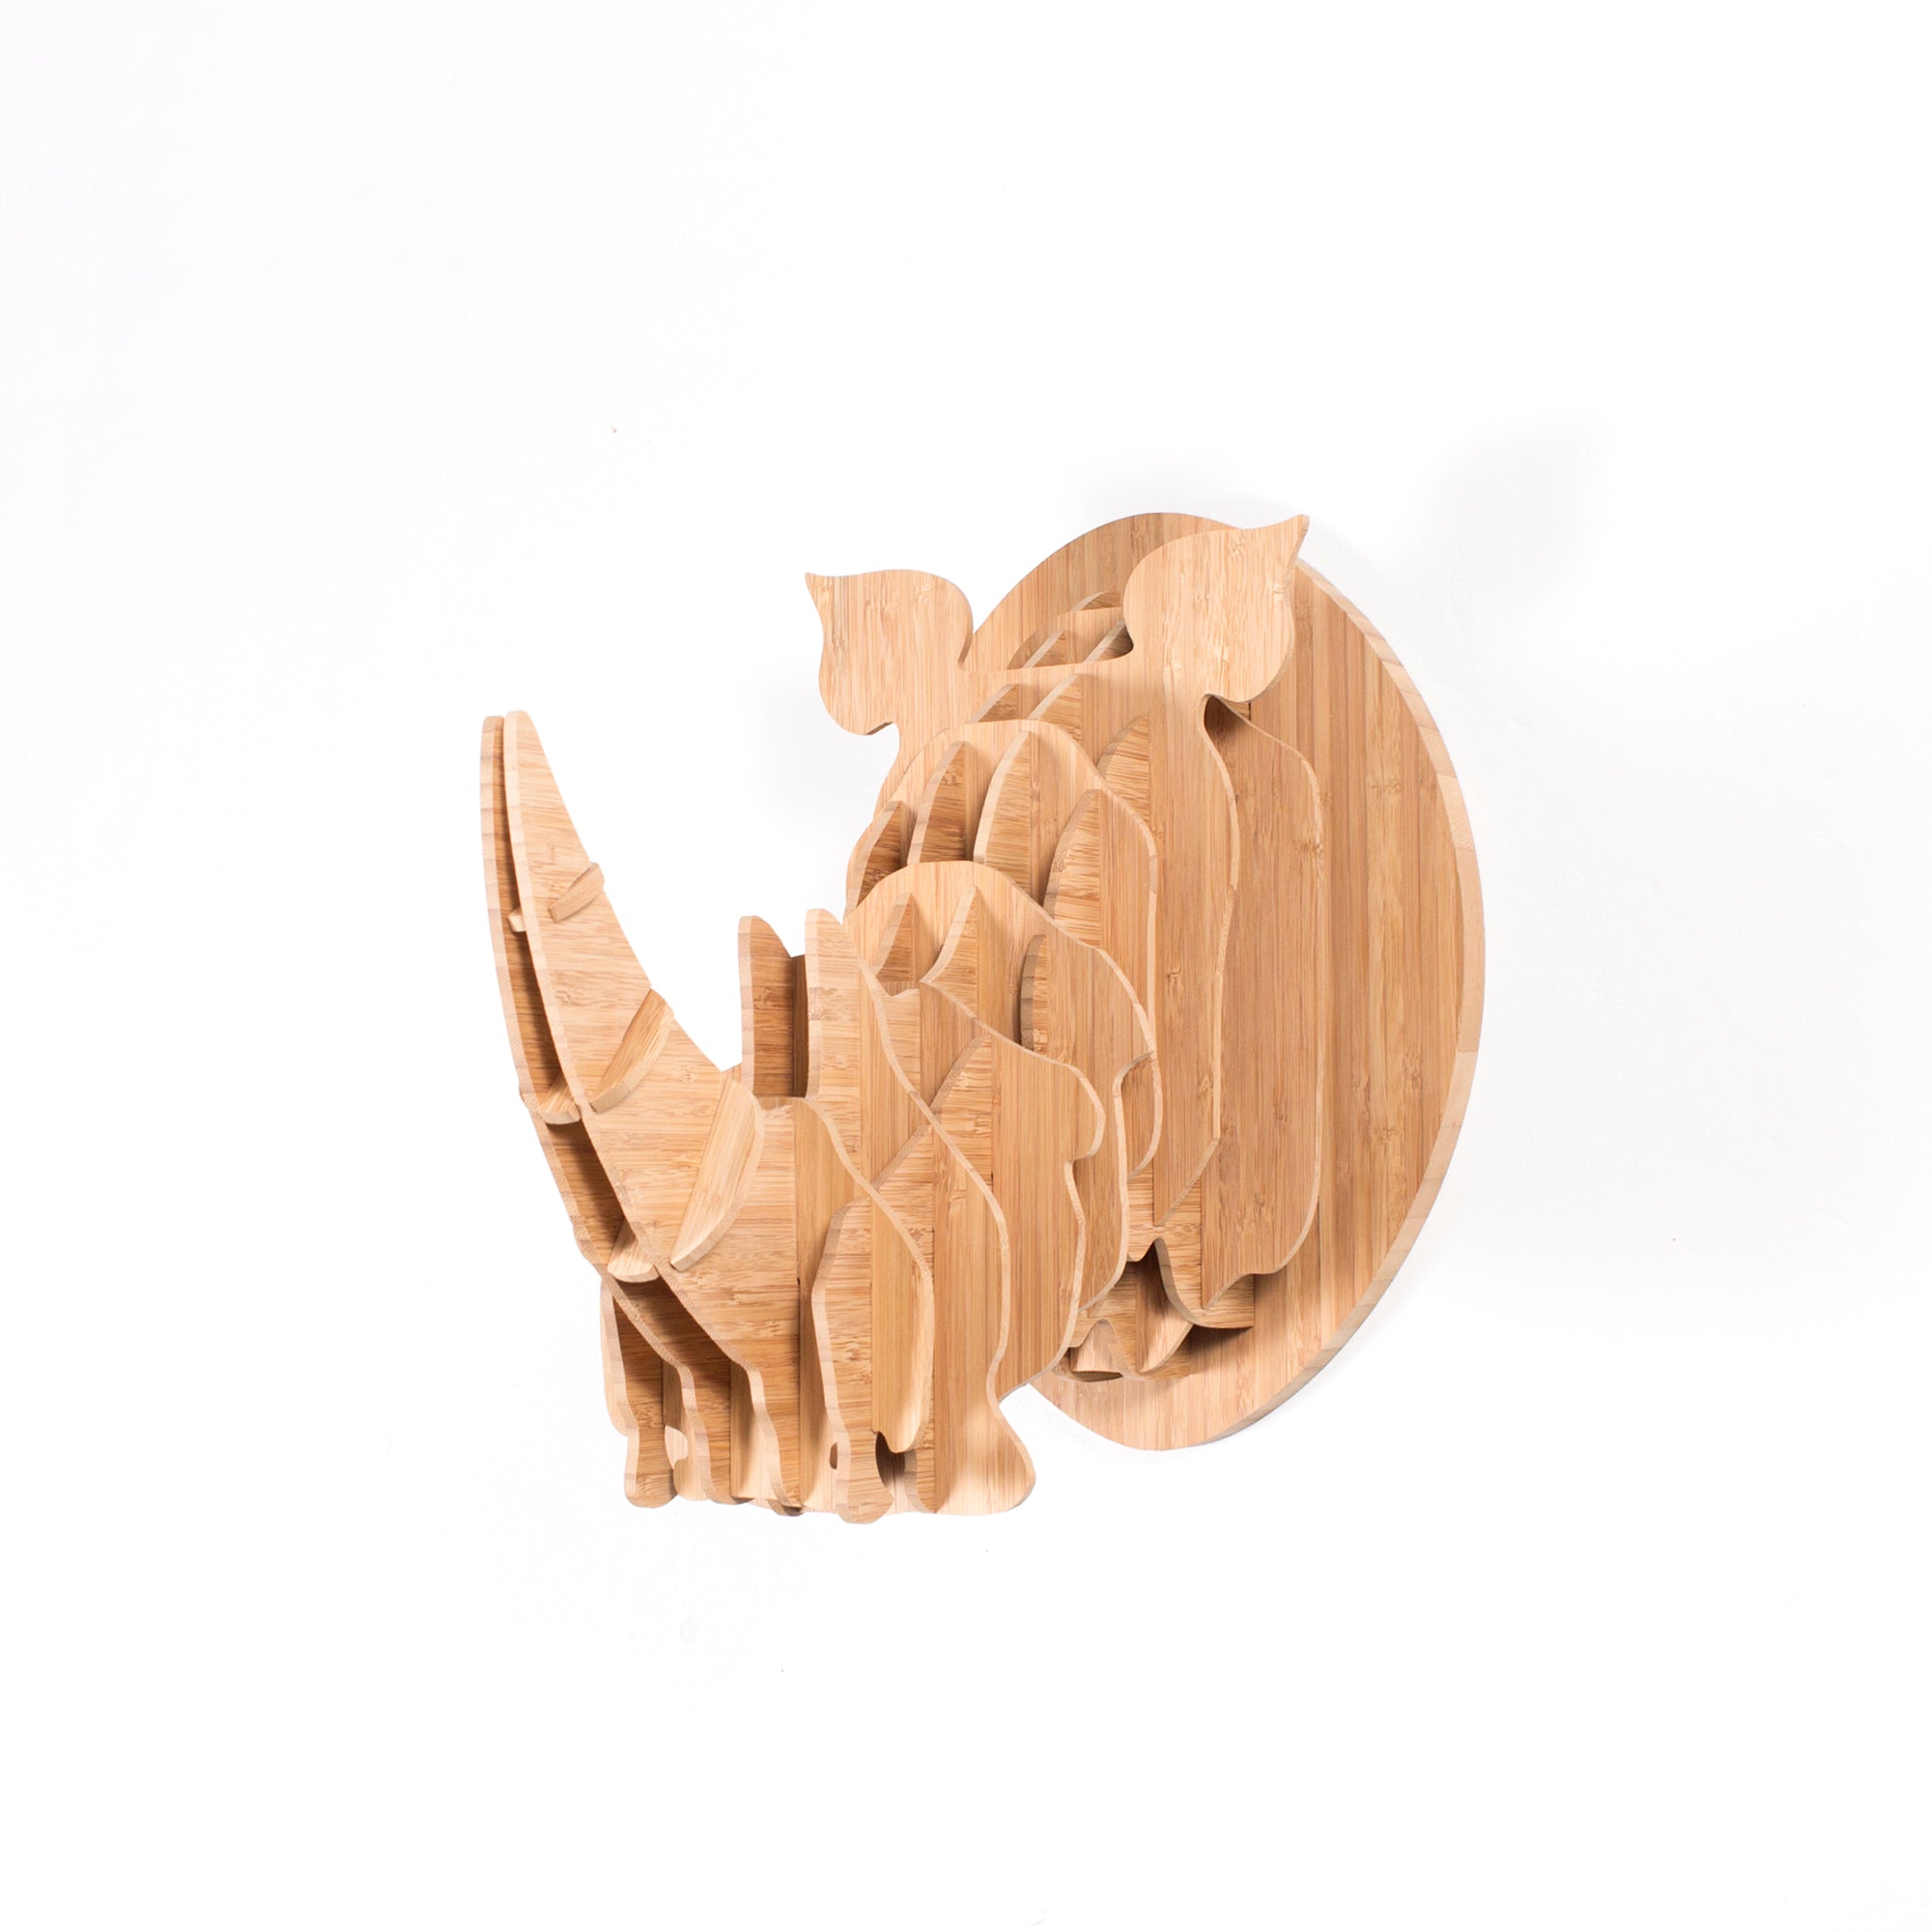 Rhino trophy head in bamboo, Head On design, flat packed